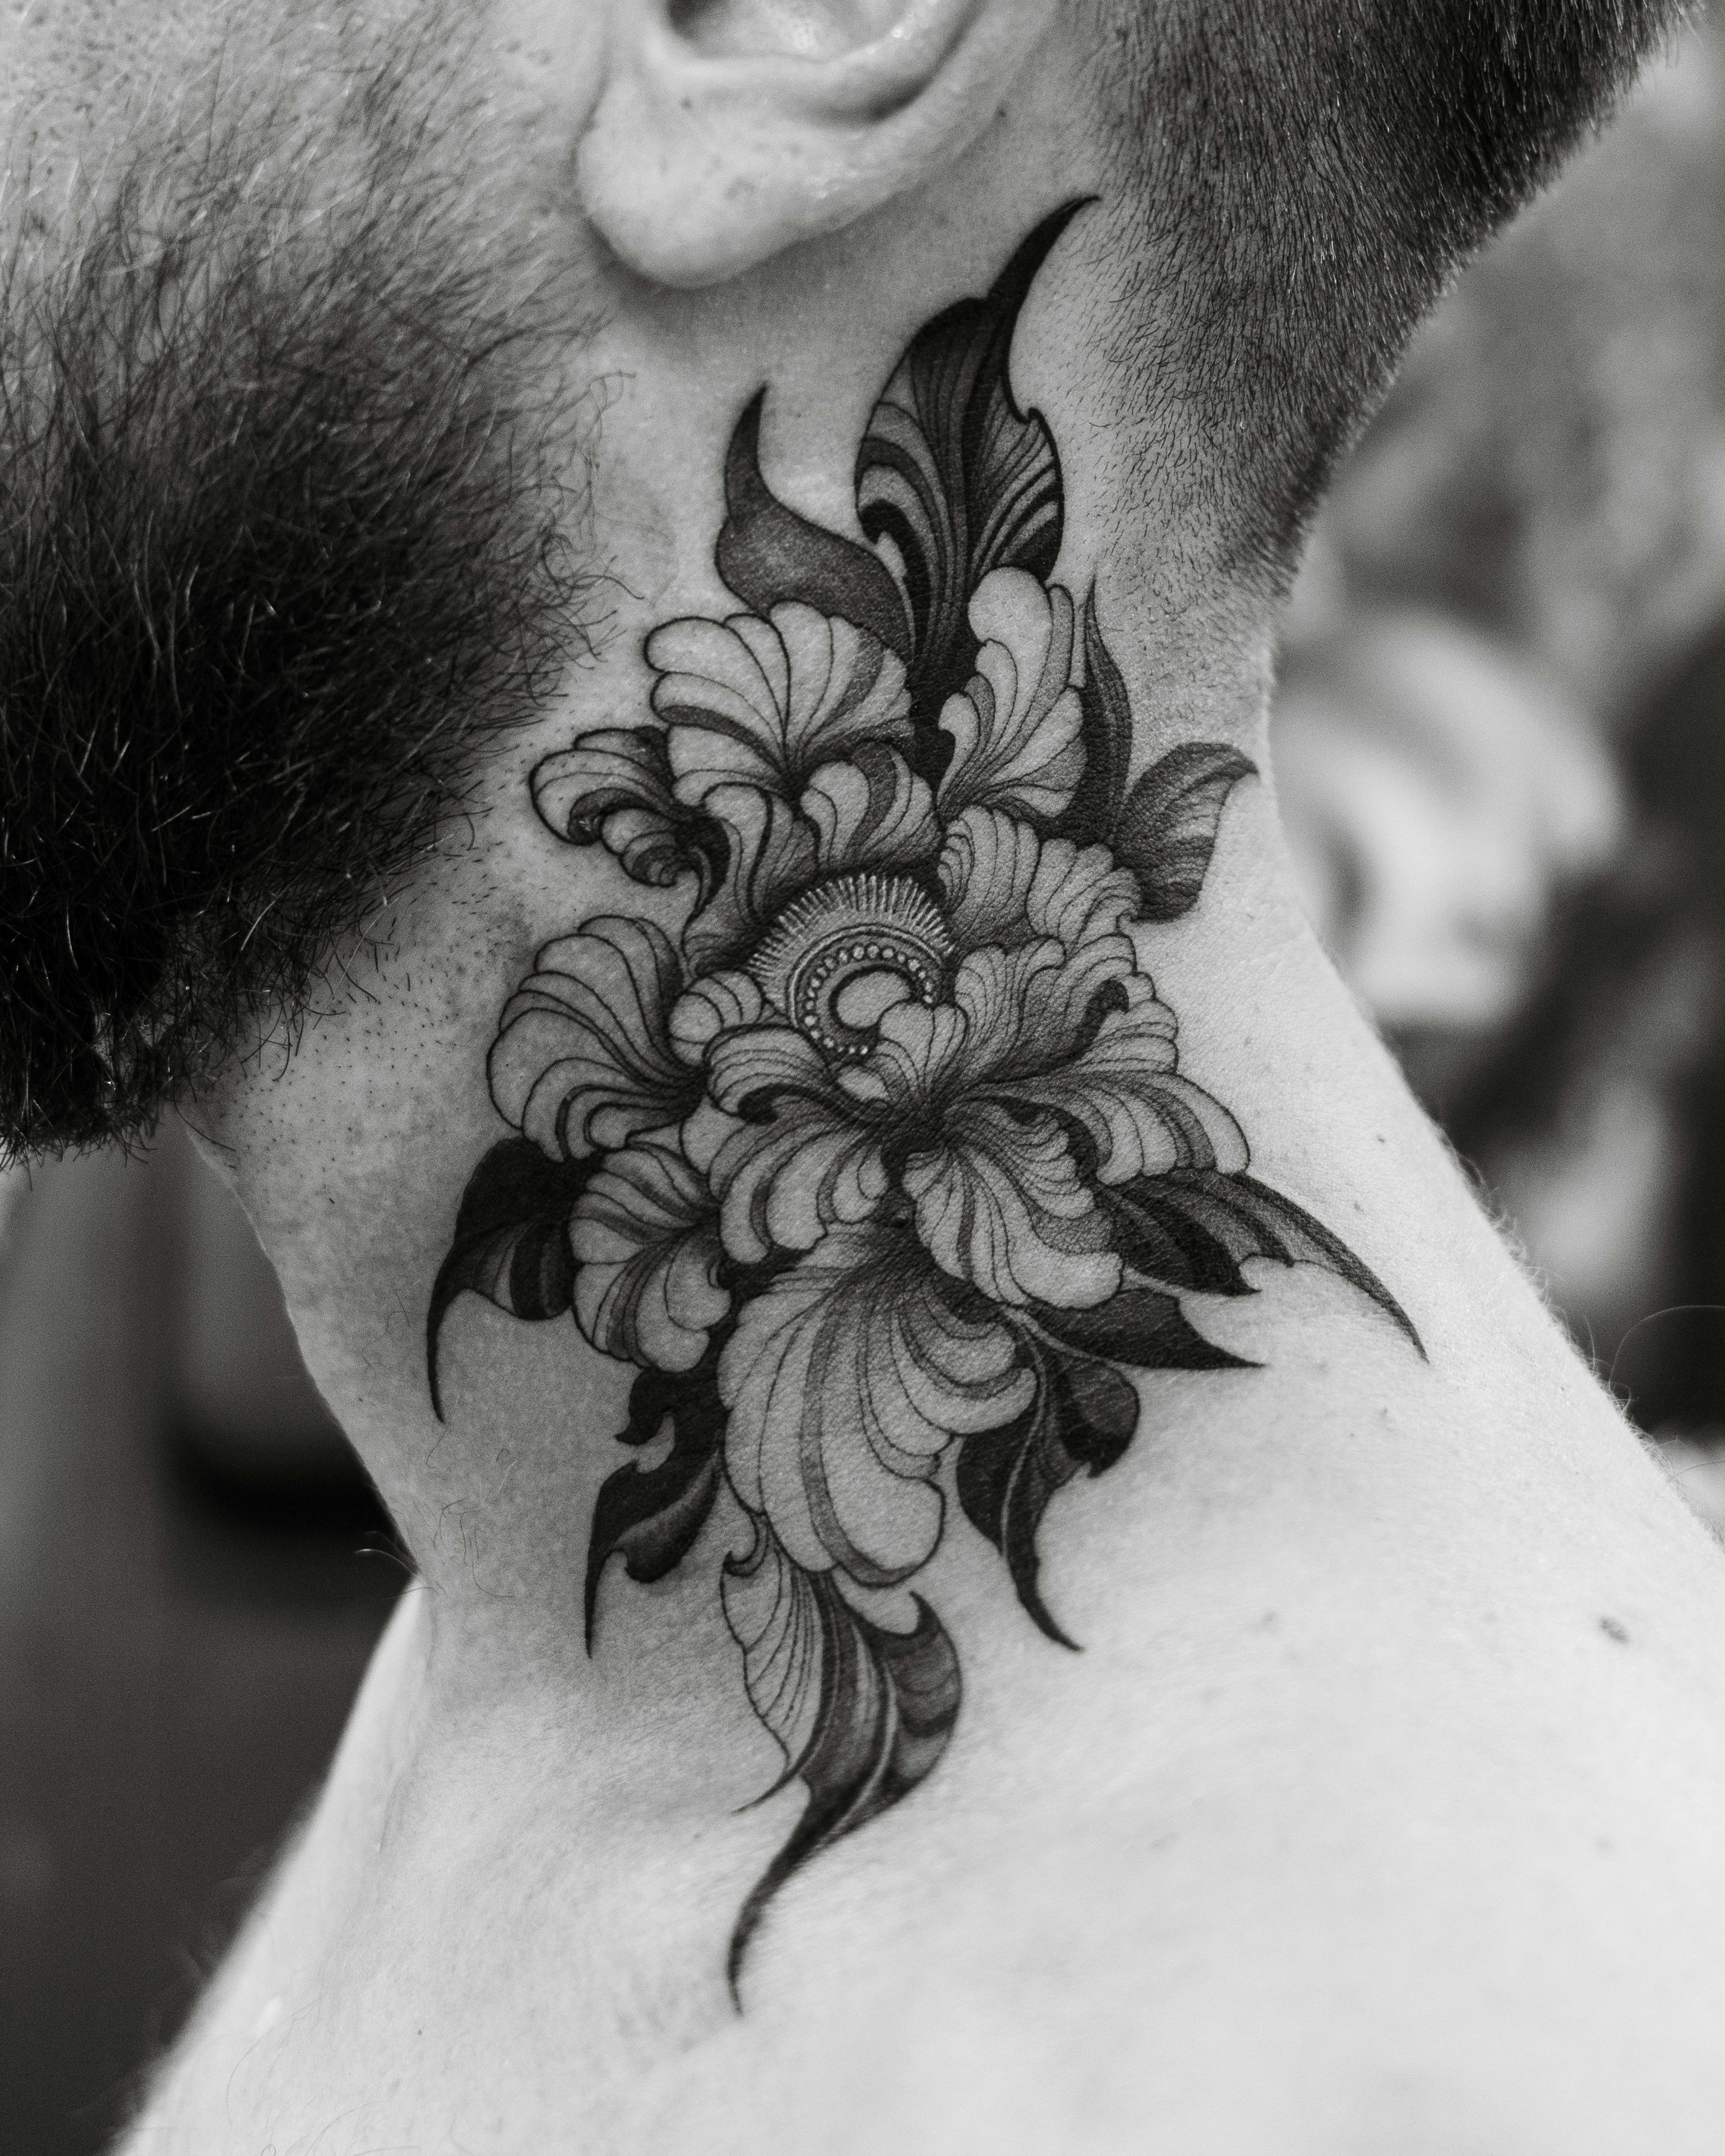 4PCS Black Fake Tattoo Men Neck Body Flower Graffiti Temporary Realistic  Sticker | eBay